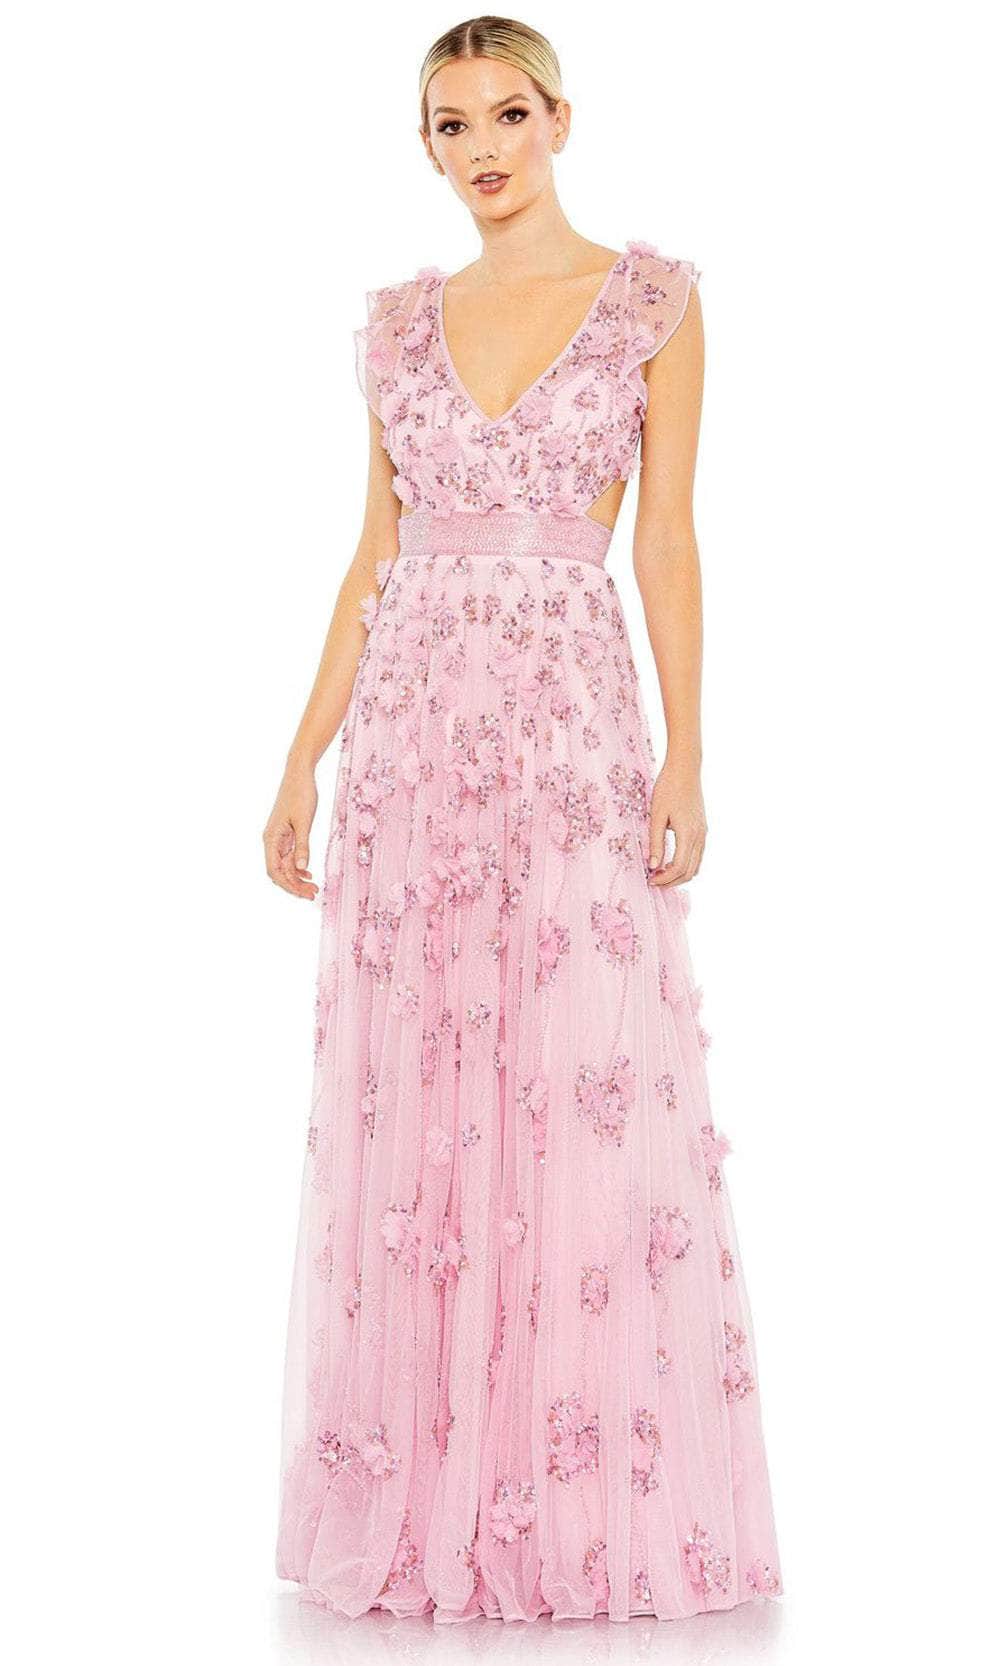 Mac Duggal 93692 - 3D Flower Embellished A-Line Prom Dress Evening Dresses 6 / Candy Pink